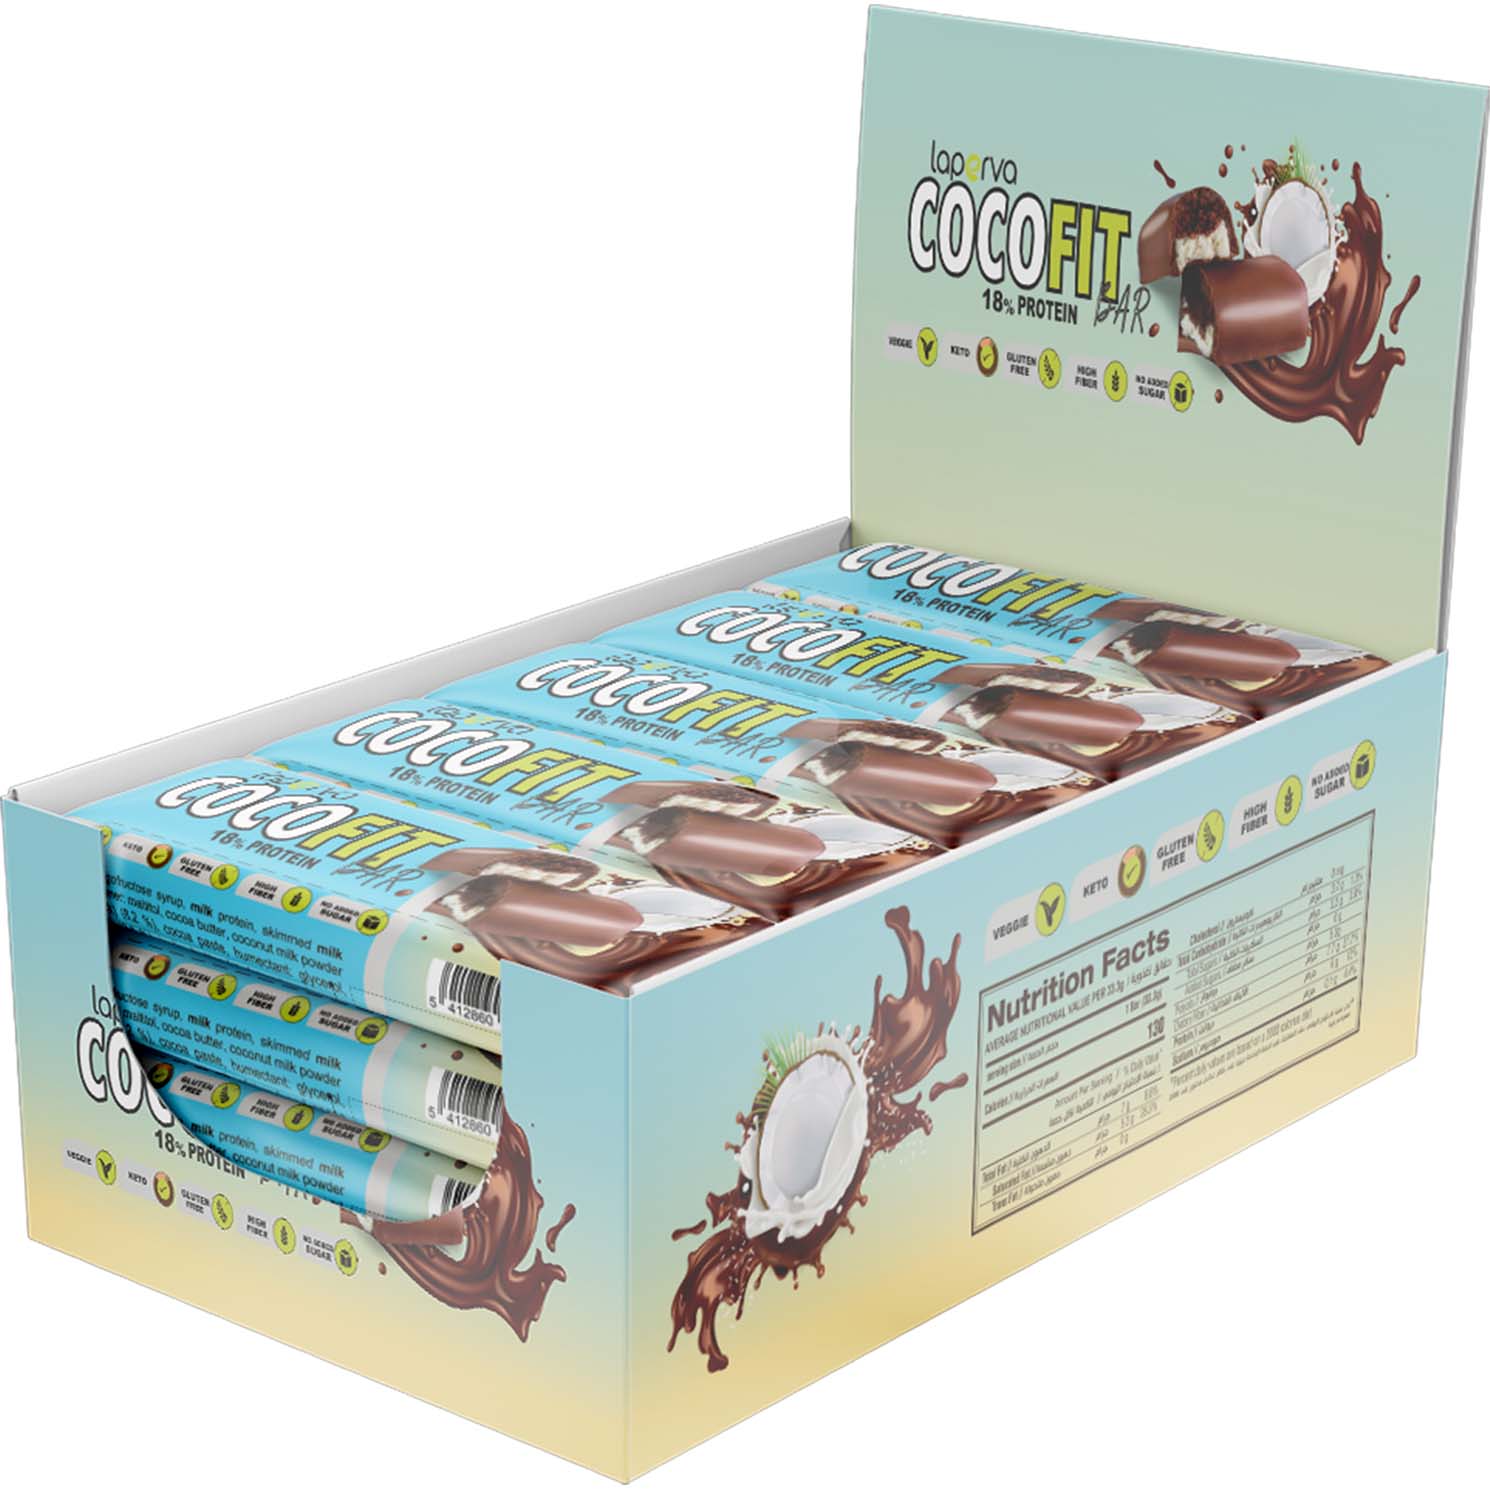 Laperva Coco Fit Bar Box of 18 Bars